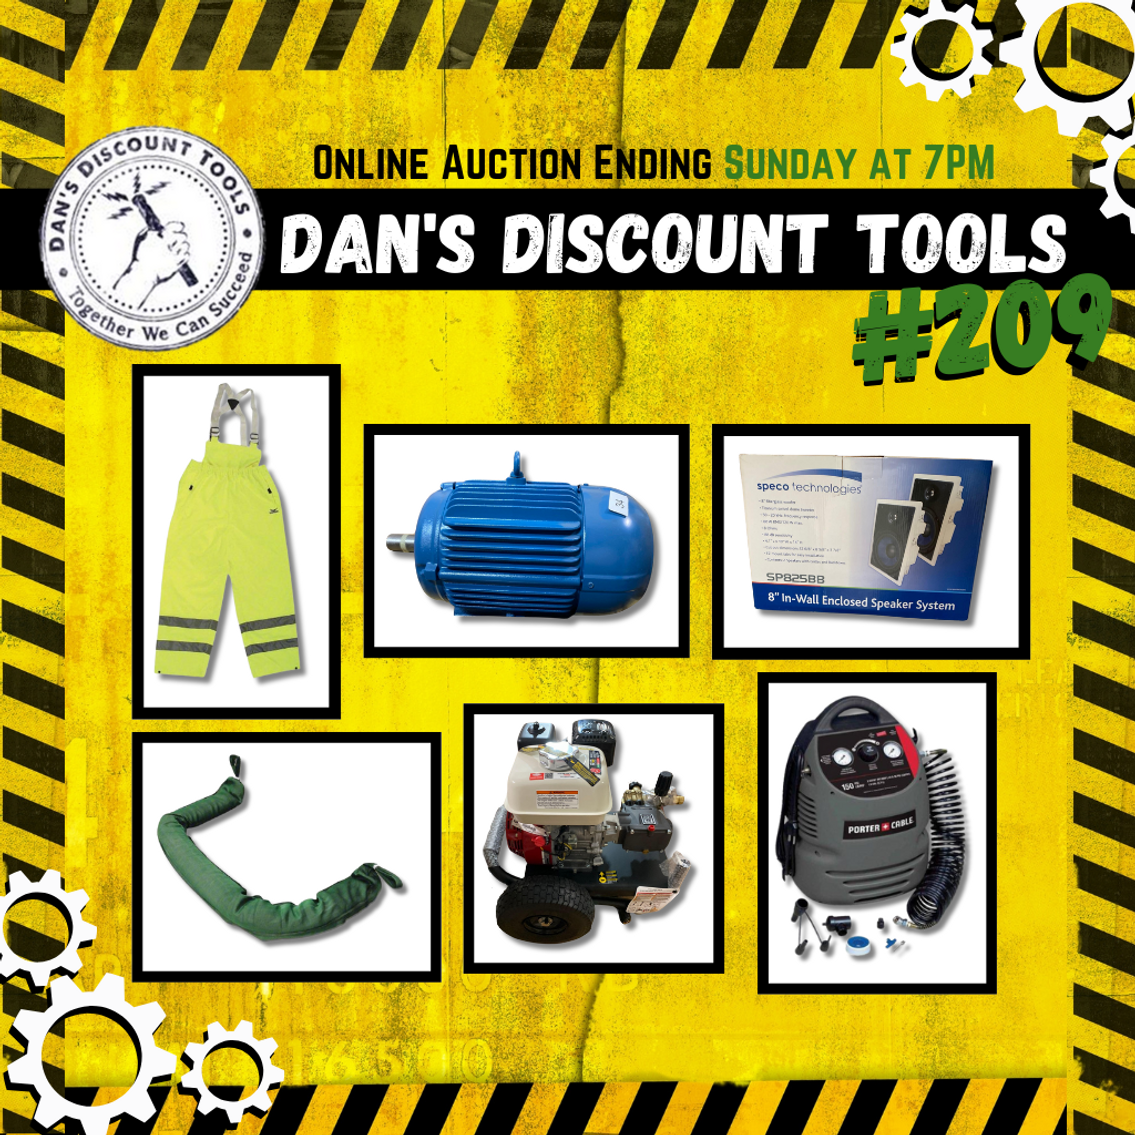 Dan's Discount Tools #209